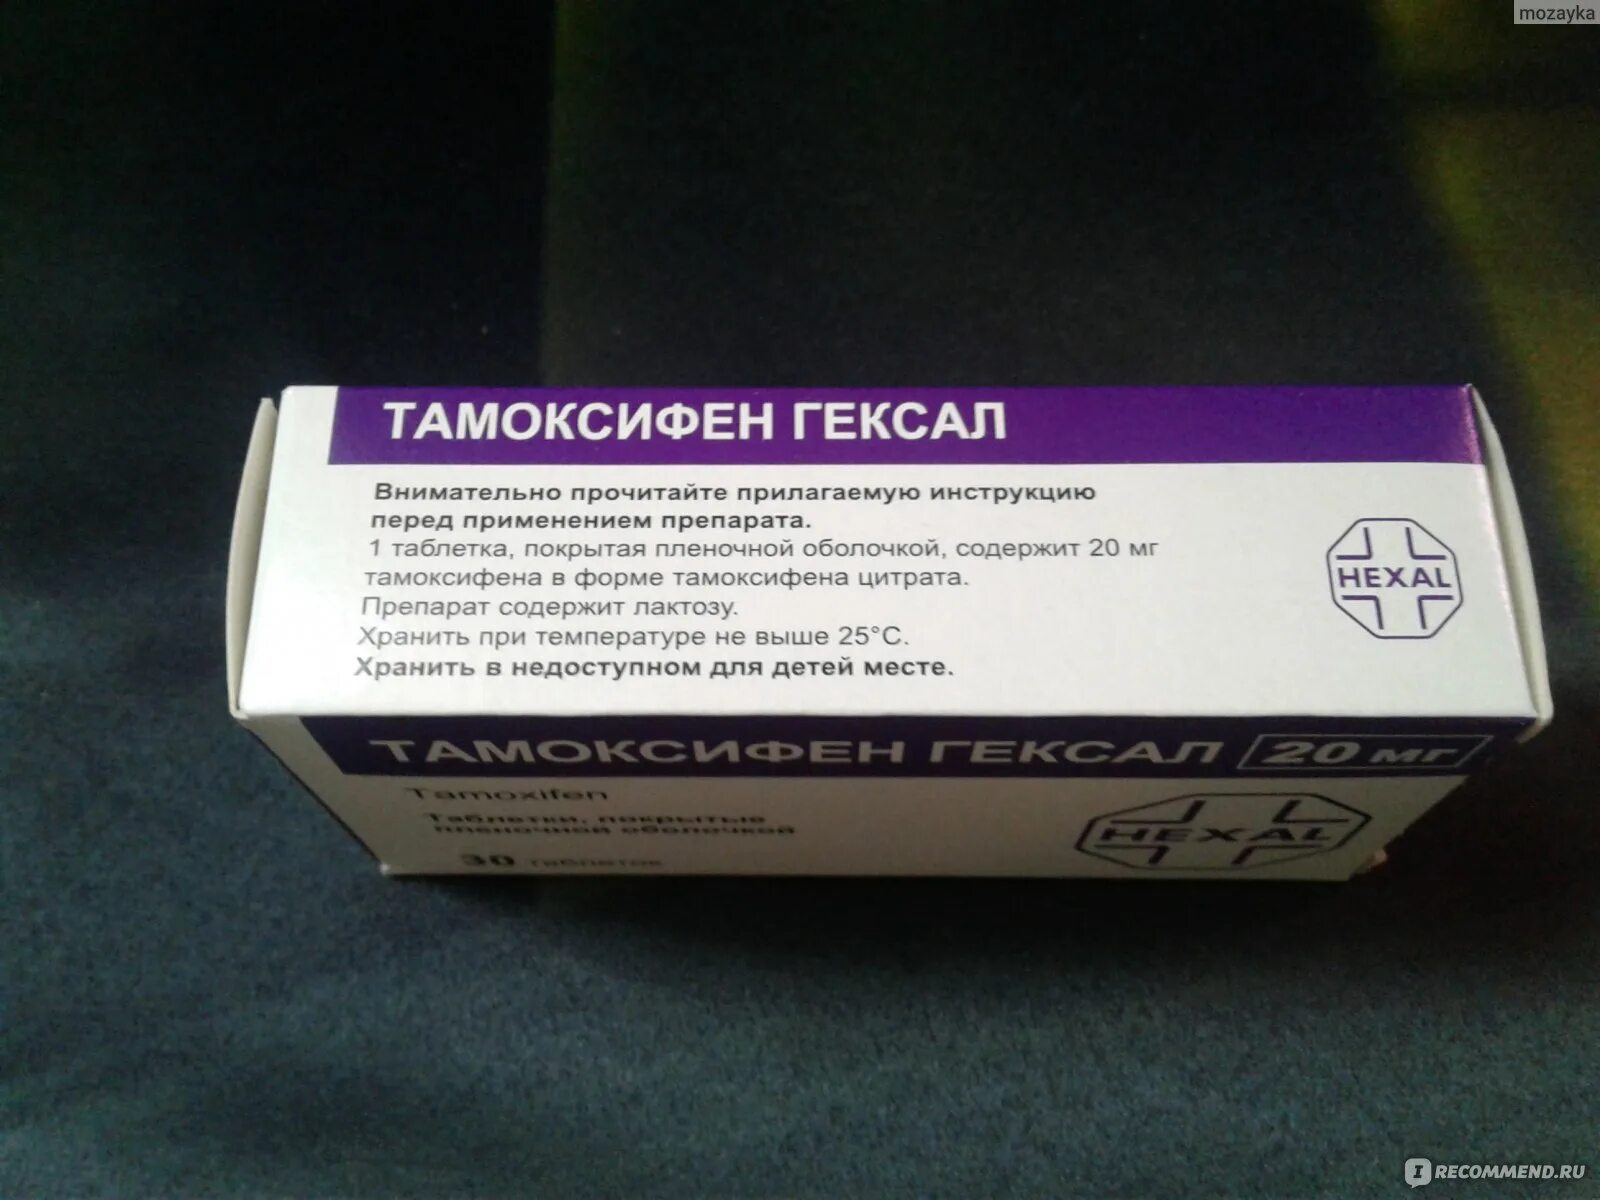 Тамоксифен Финляндия 100 таб. Tamoxifen Hexal Германия 20мг. Тамоксифен гексал производитель. Тамоксифен гексал производитель Германия.